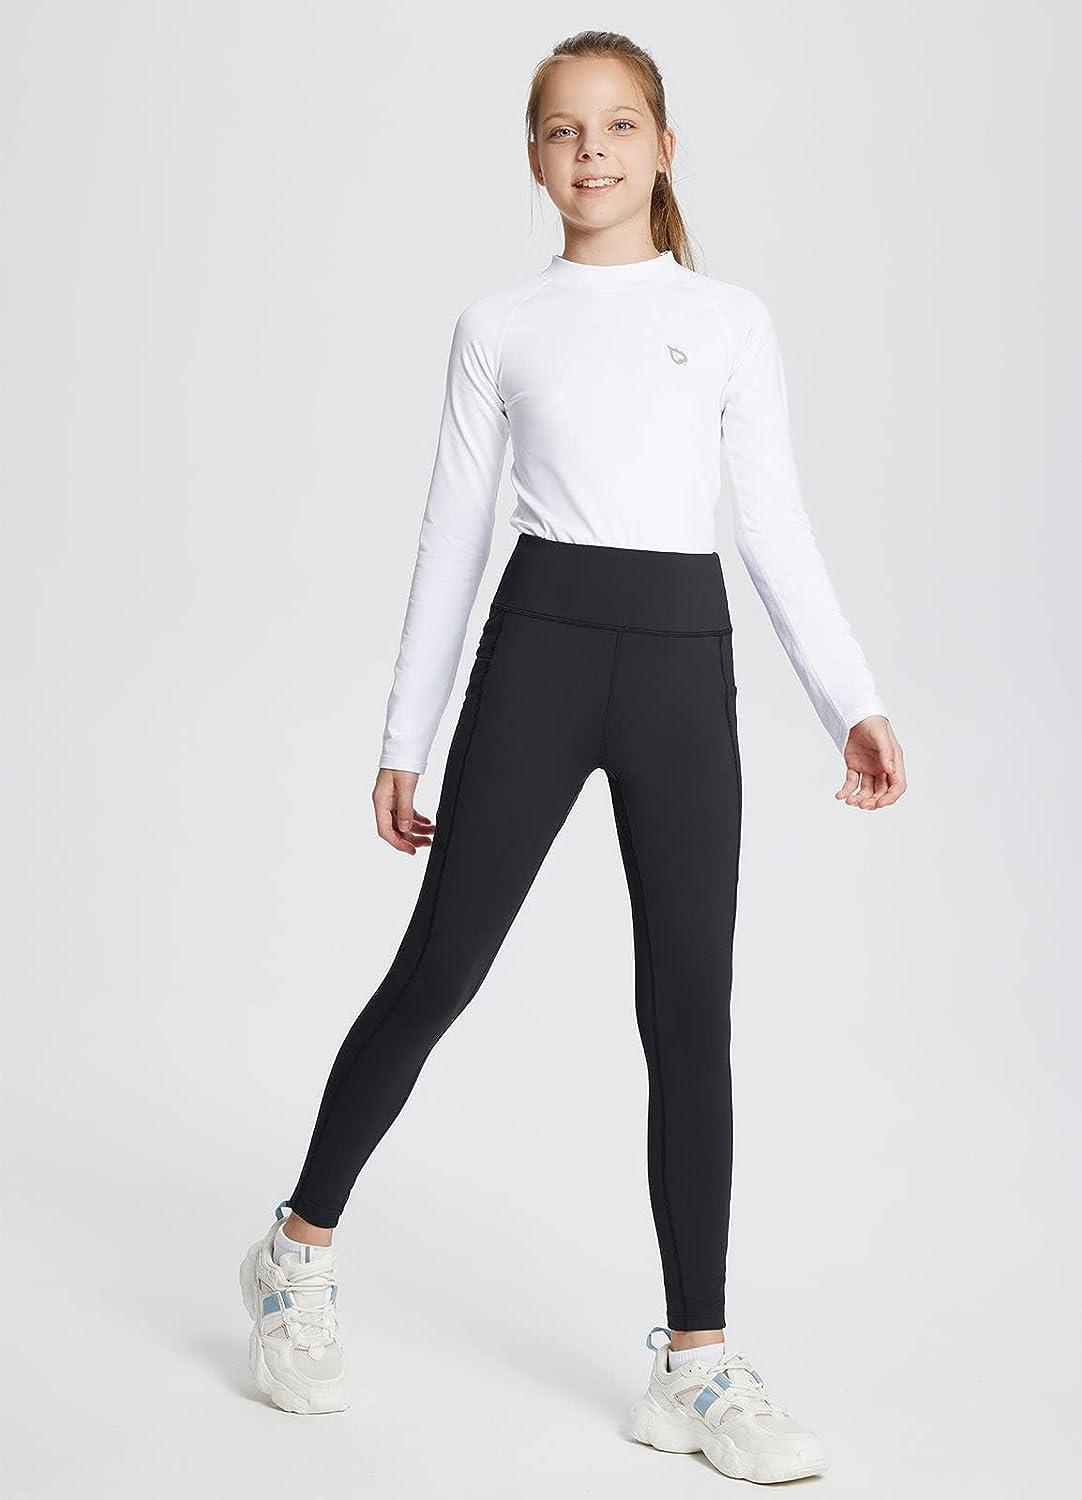 BALEAF Girls' Fleece Lined Leggings Kids Warm Pants Youth Compression Yoga  Athletic School Pants with Pockets Black Medium